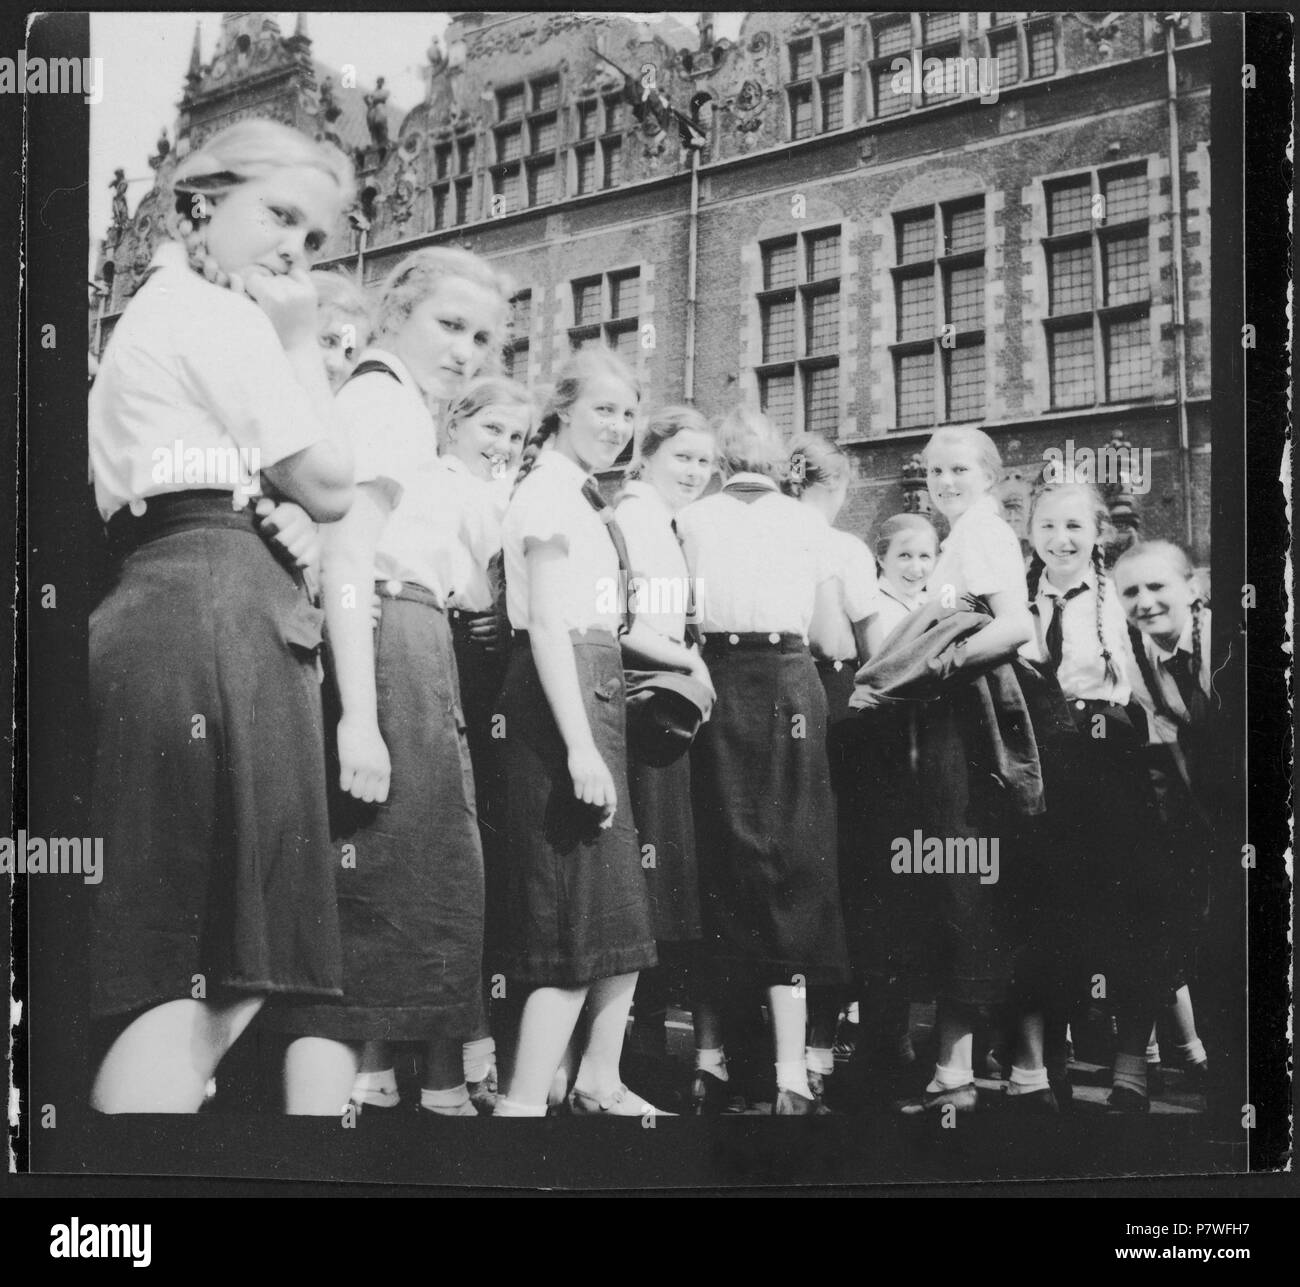 Bund deutscher madel hi-res stock photography and images - Alamy